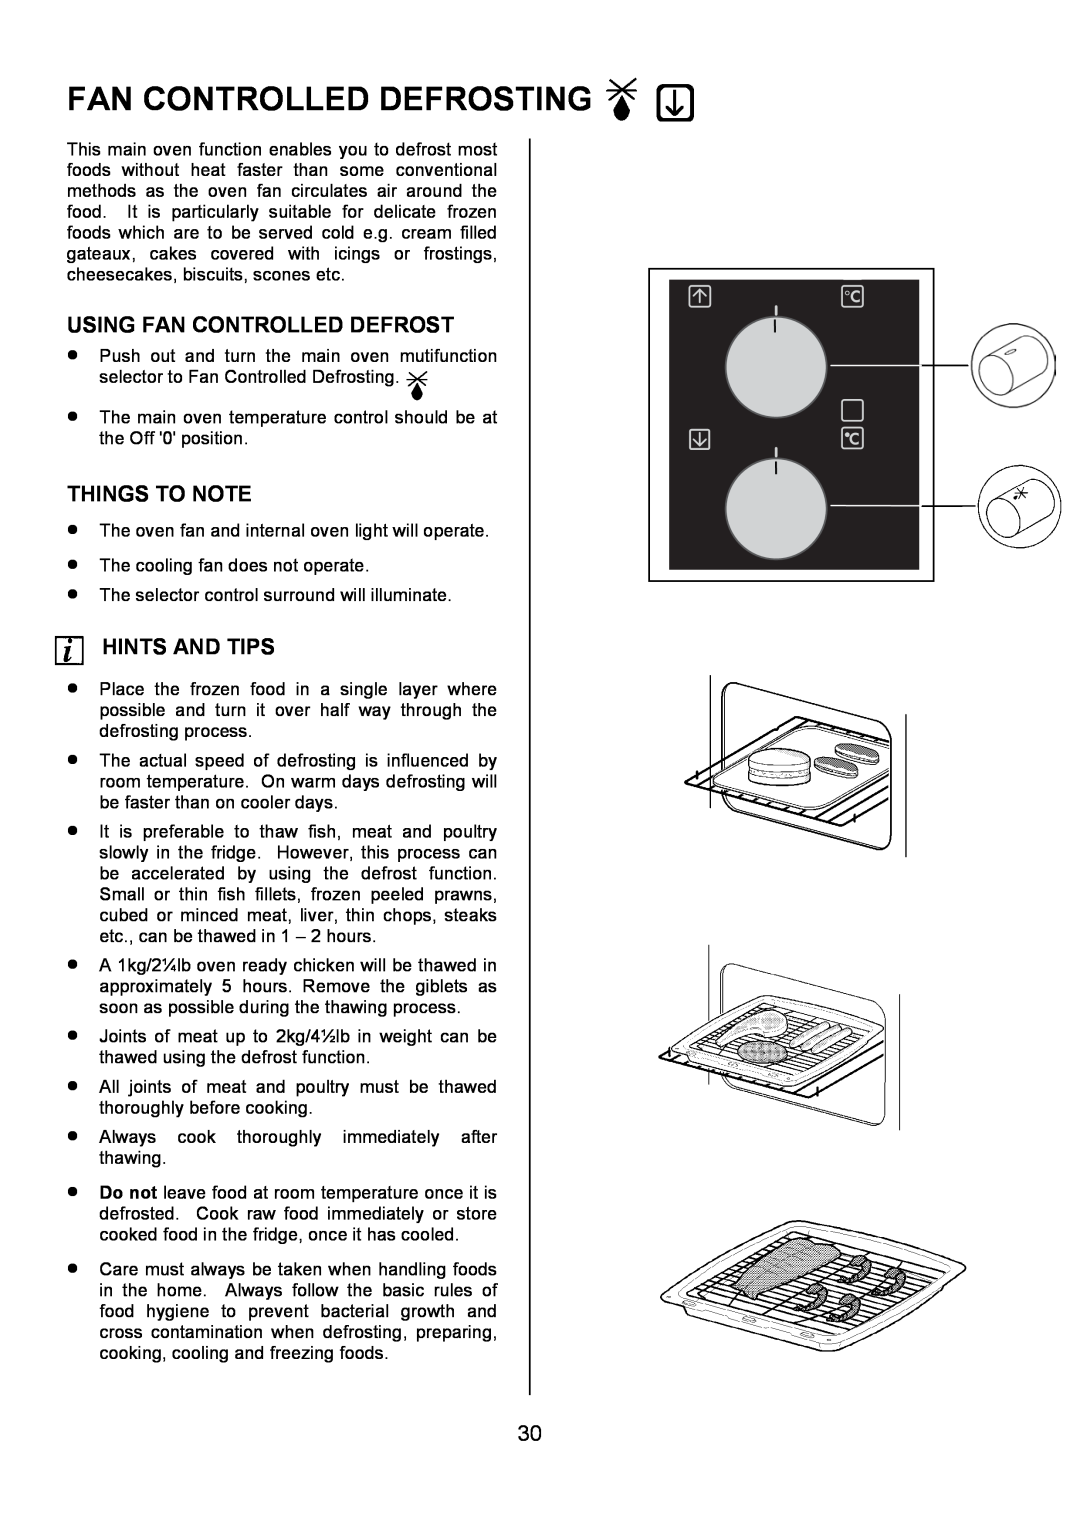 AEG U7101-4, 311704300 manual Fan Controlled Defrosting, Using Fan Controlled Defrost, Things To Note, Hints And Tips 